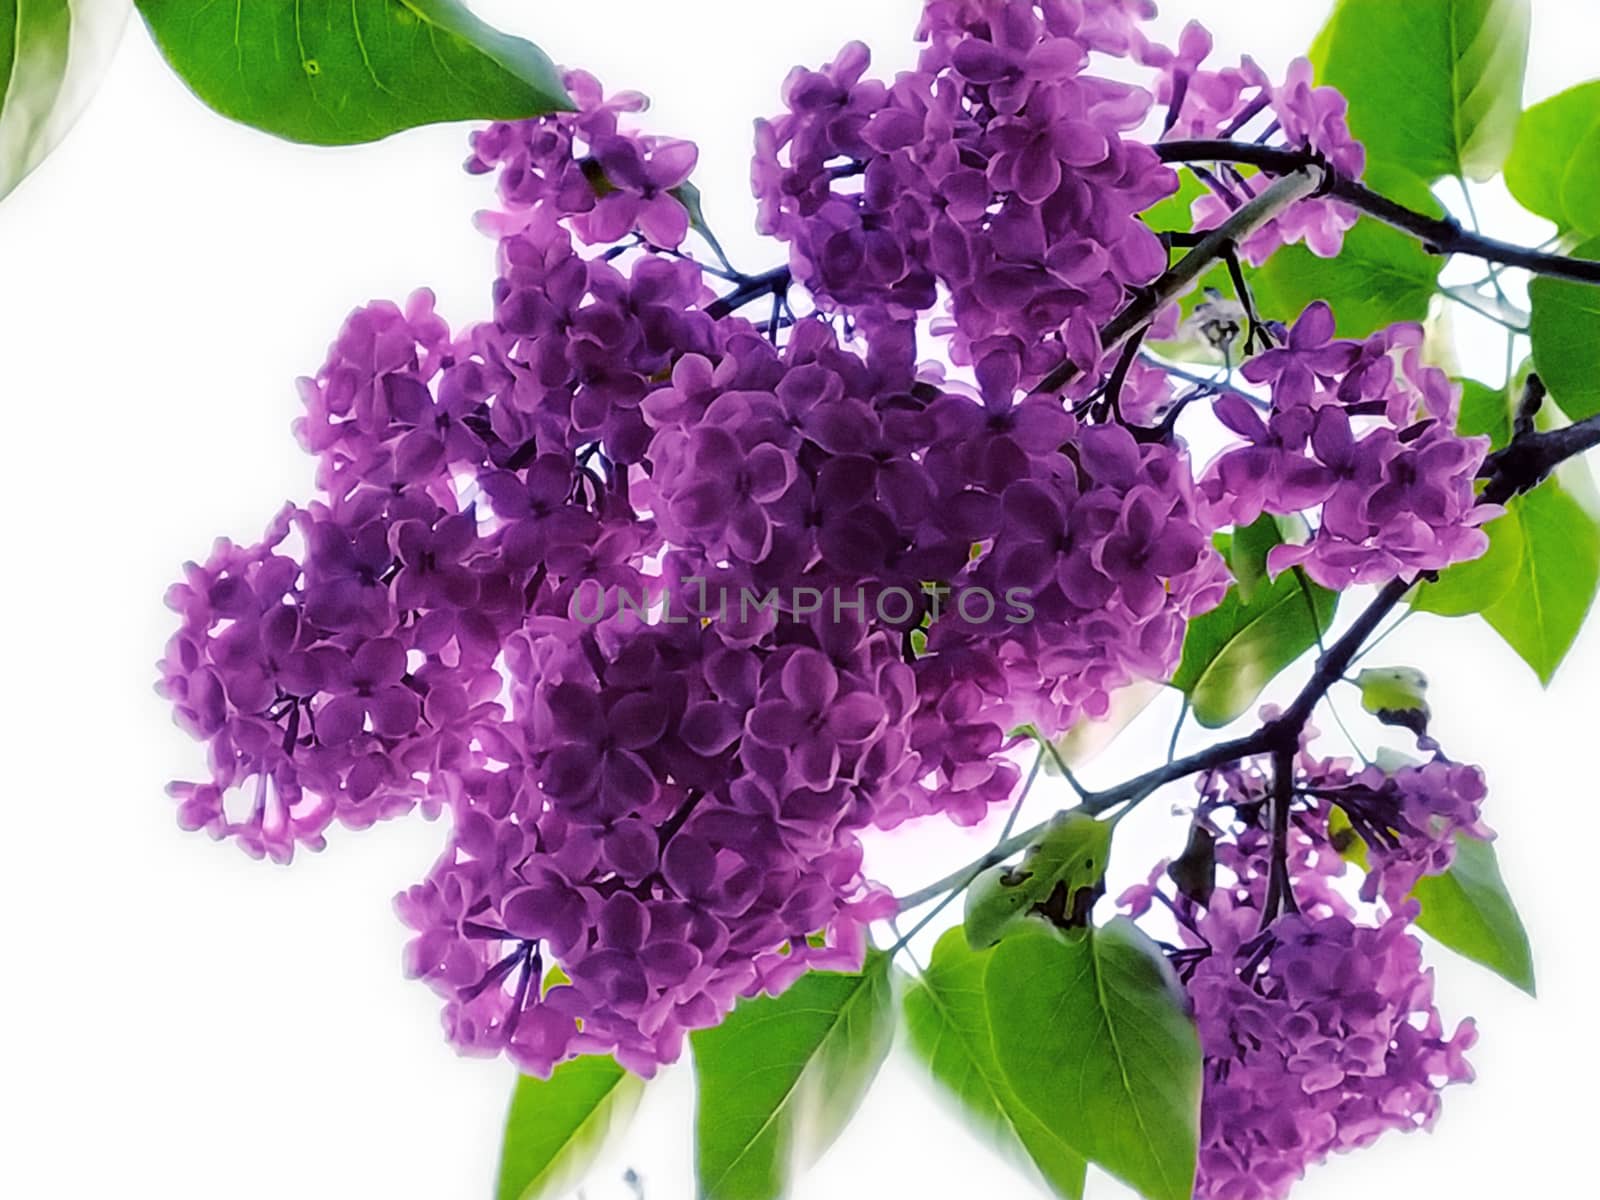 lilac on a tree by sagasan